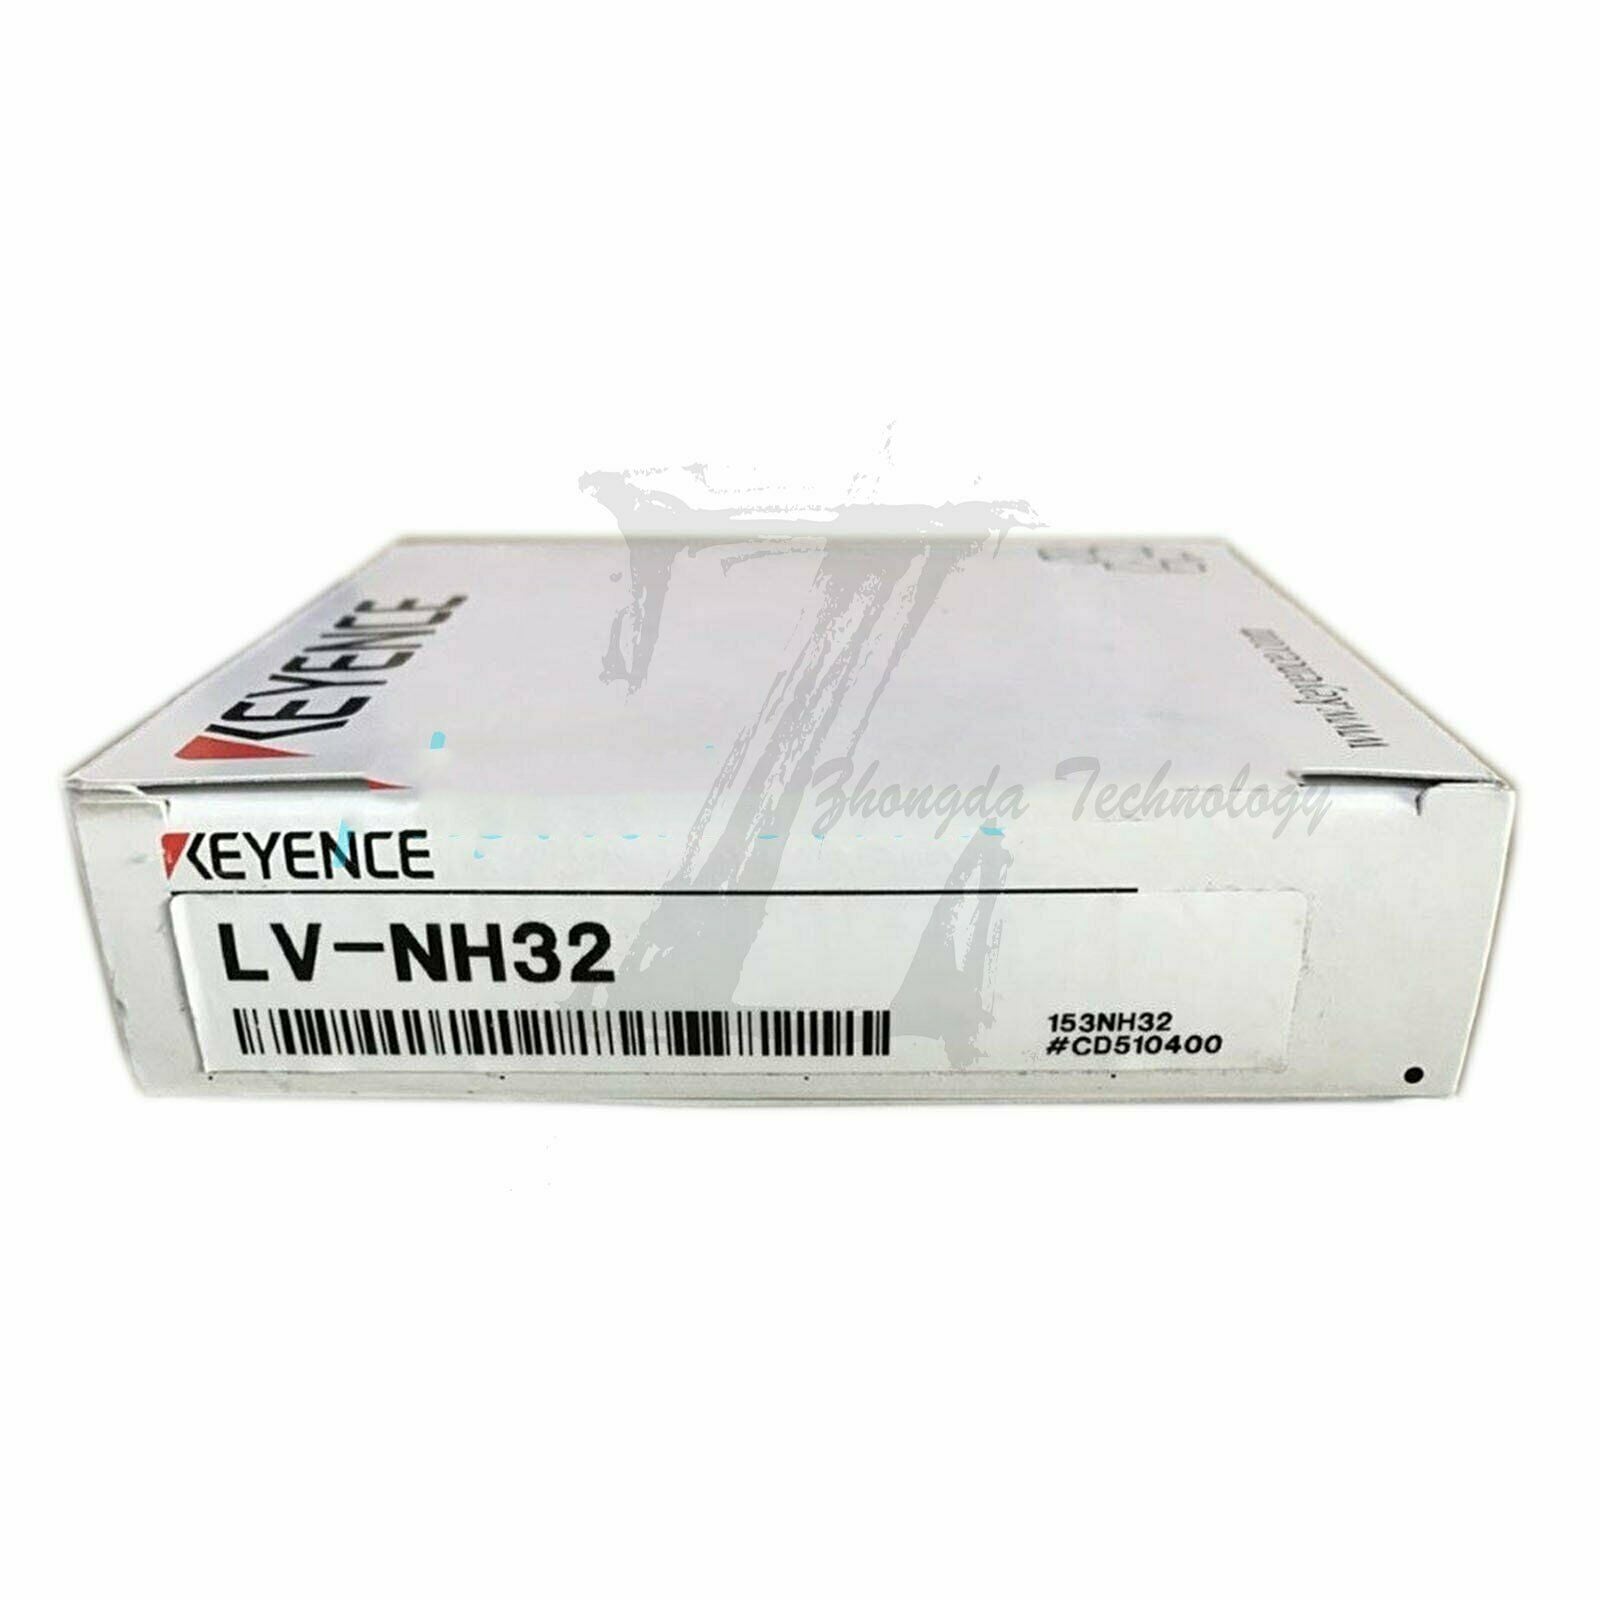 New in box Keyence LV-NH32 sensor LVNH32